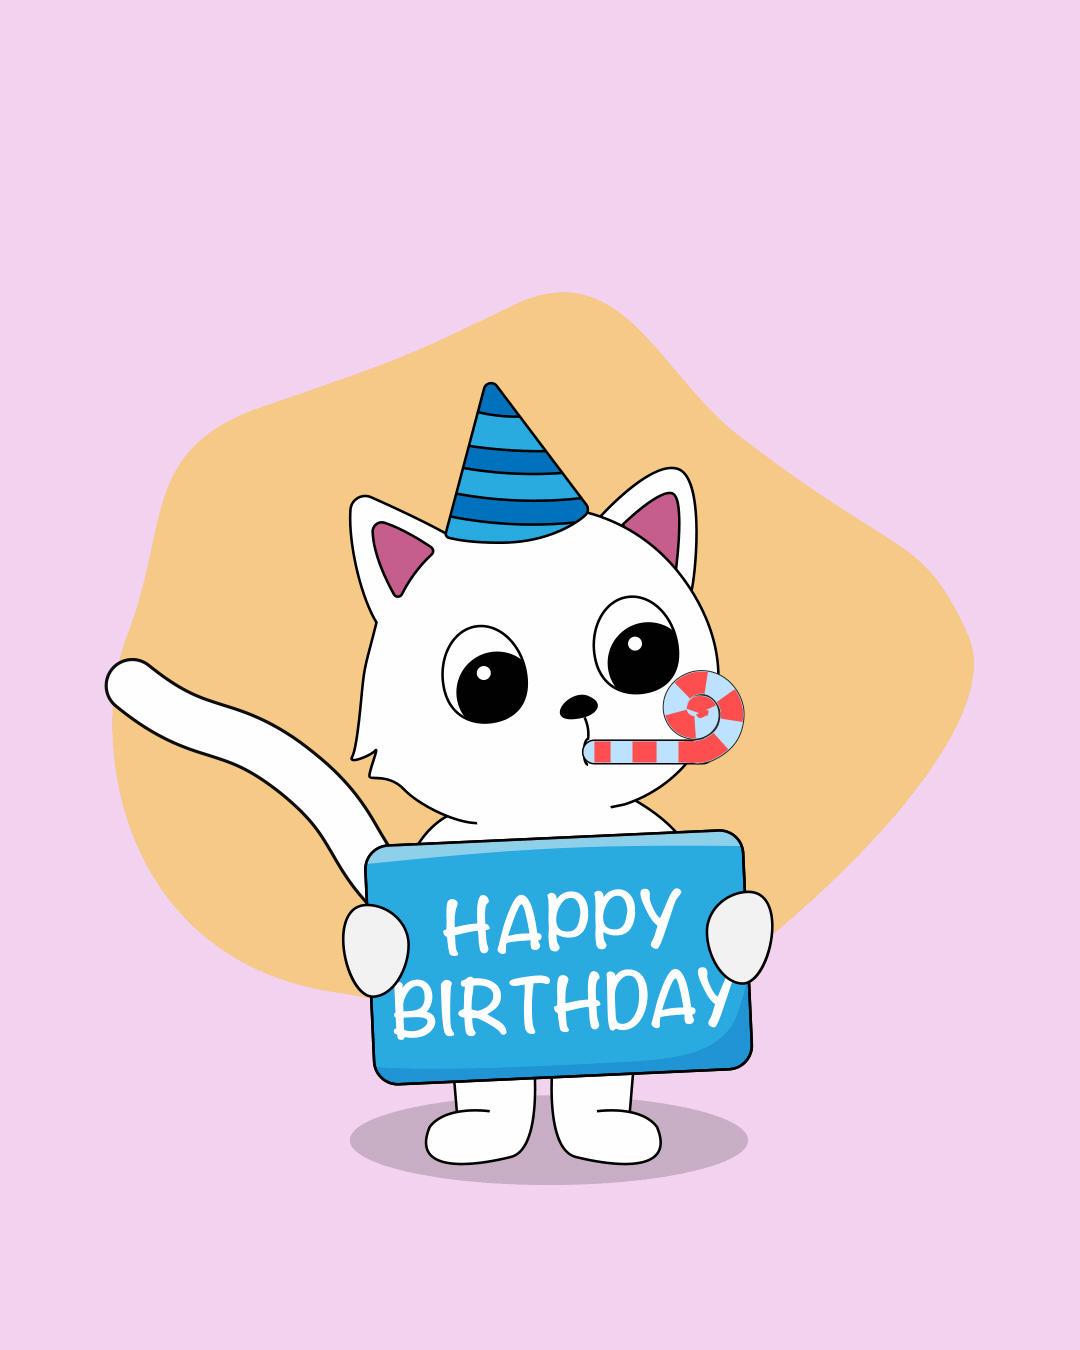 Free Funny Happy Birthday Animated Images and GIFs | Birthdayyou.com